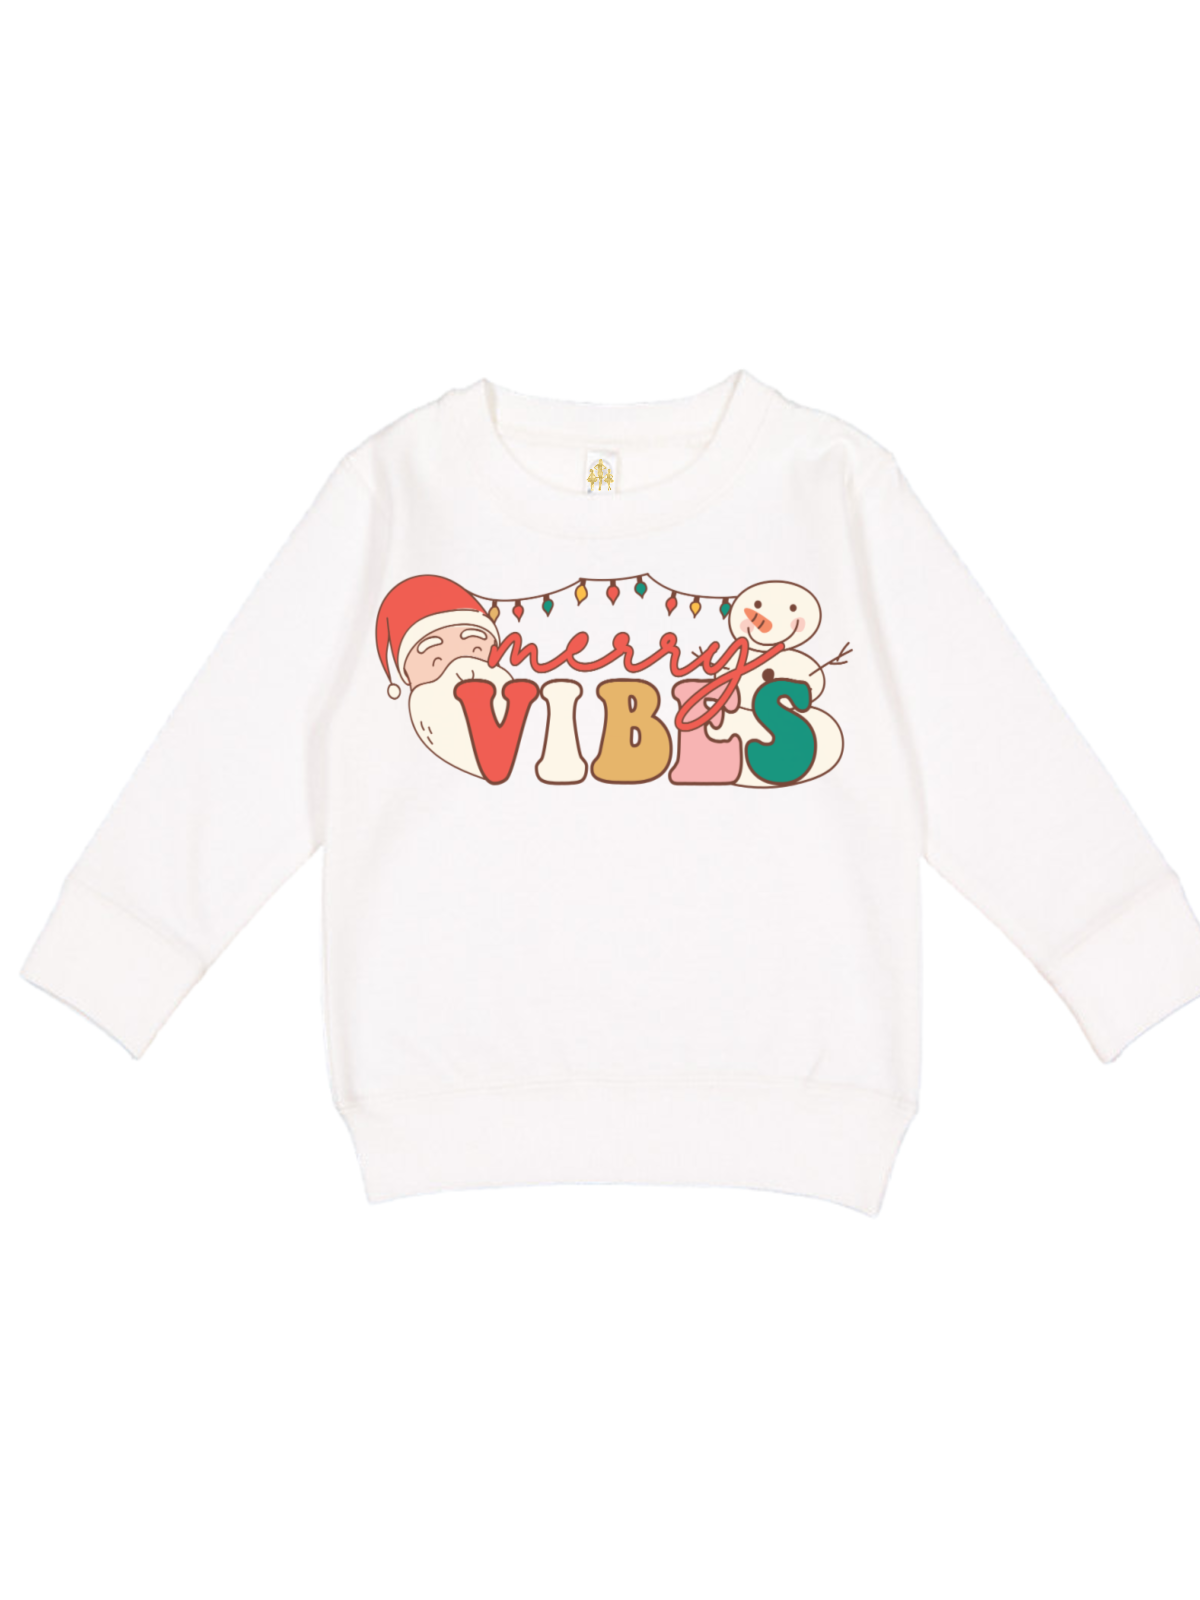 Merry Vibes Kids Retro Sweatshirt